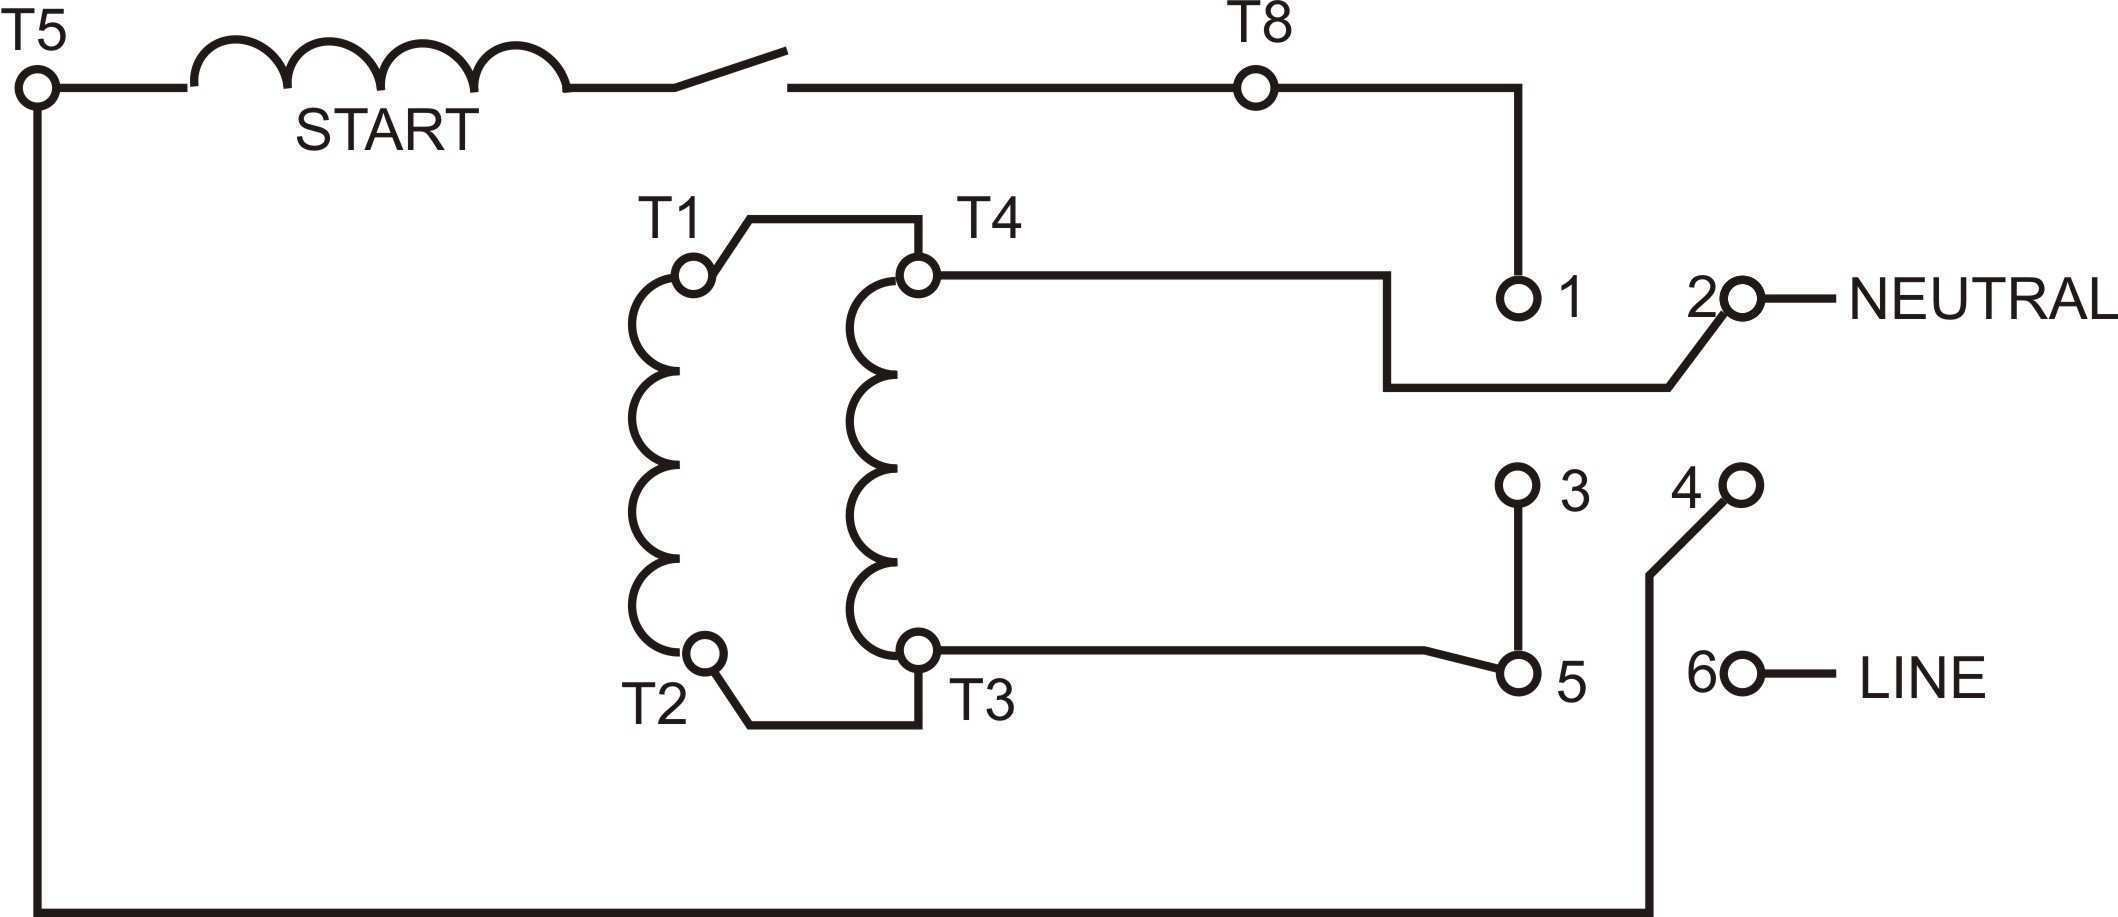 Low Voltage 6 Lead Motor Wiring Diagram | Wiring Diagram - 6 Lead Single Phase Motor Wiring Diagram